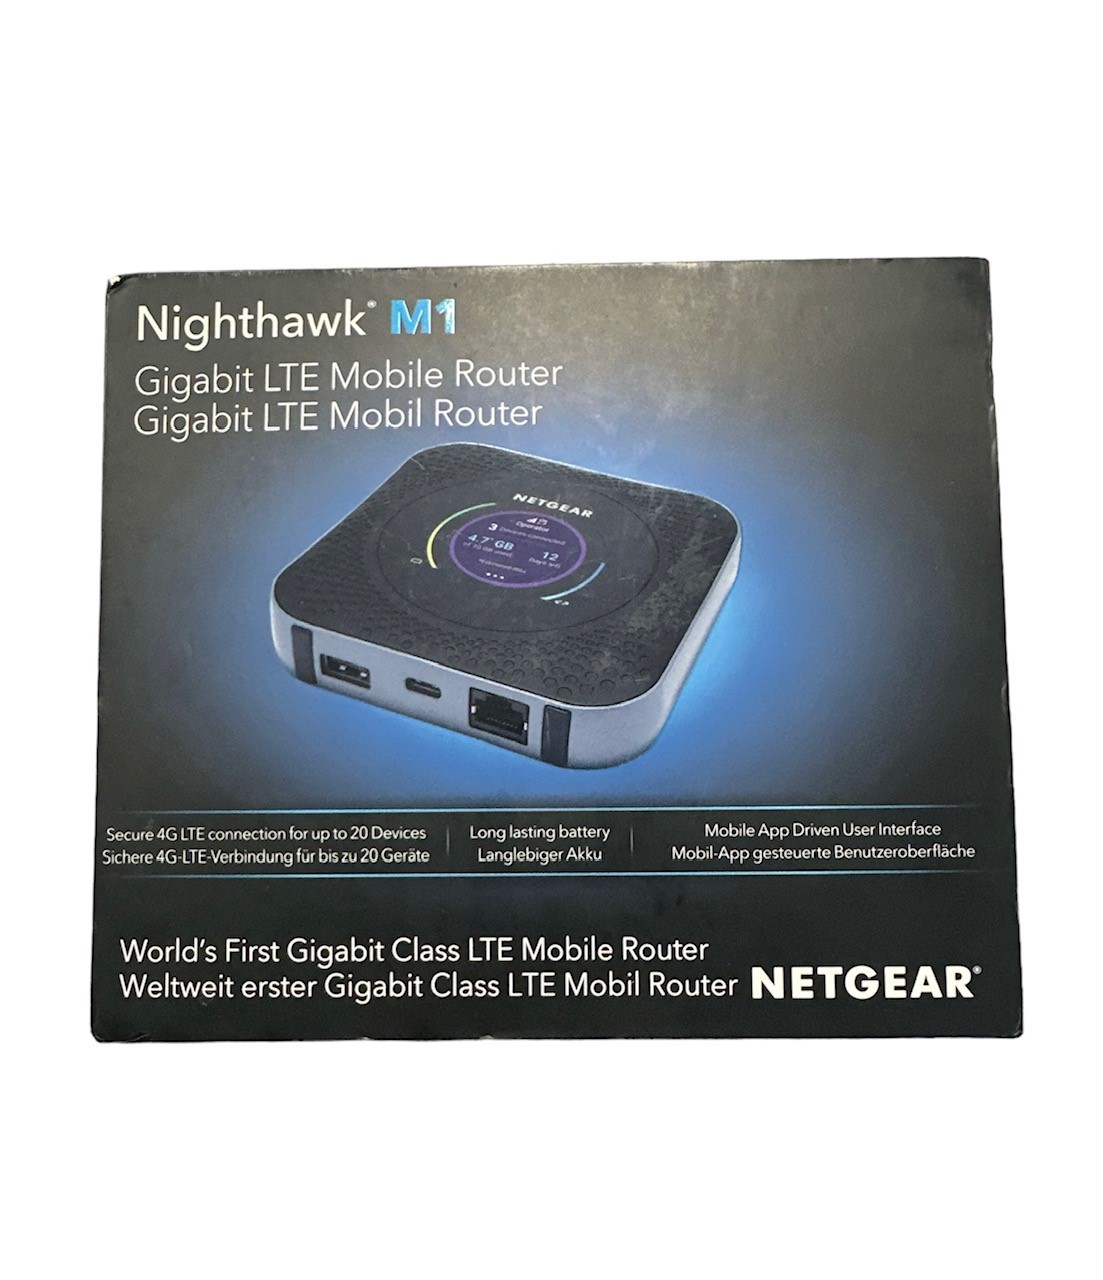 Nighthawk M1 Gigabit LTE Mobile Router